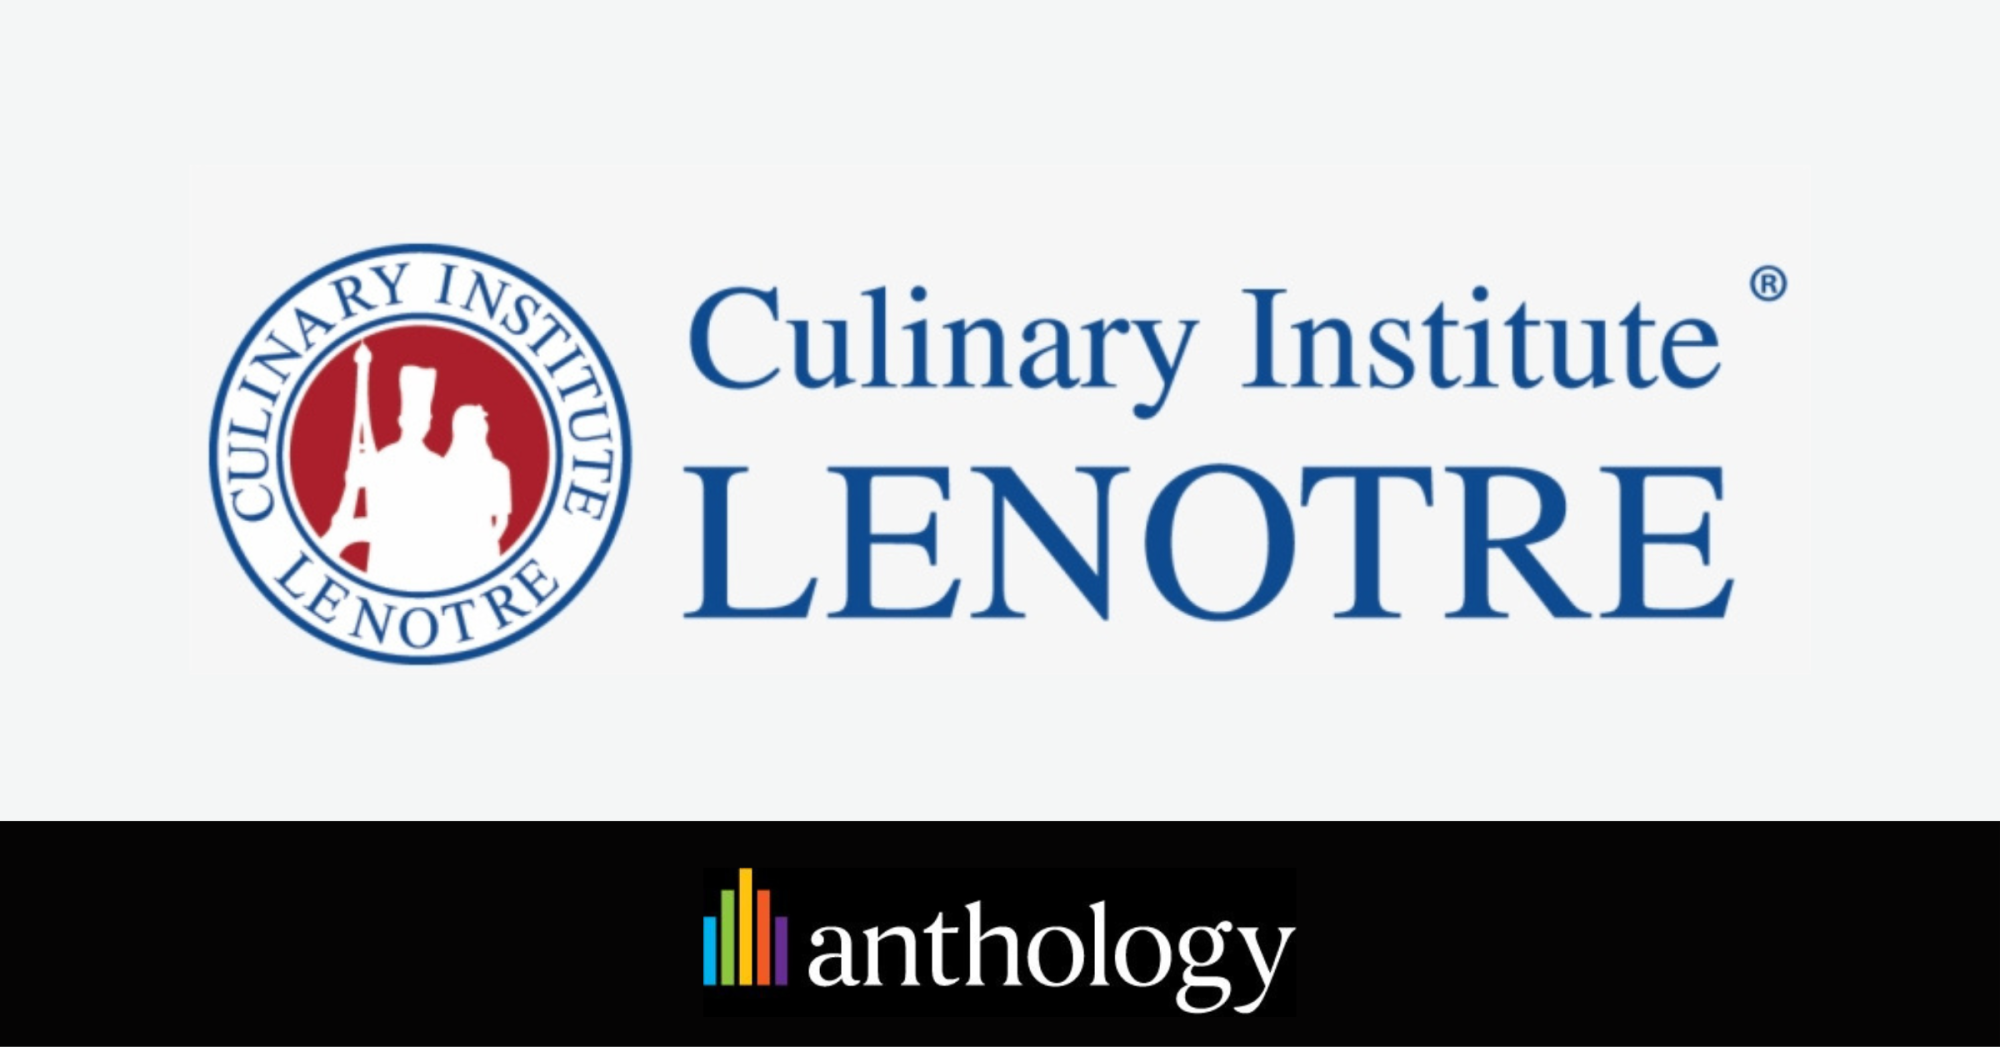 Culinary Institute Lenotre logo locked up with Anthology logo